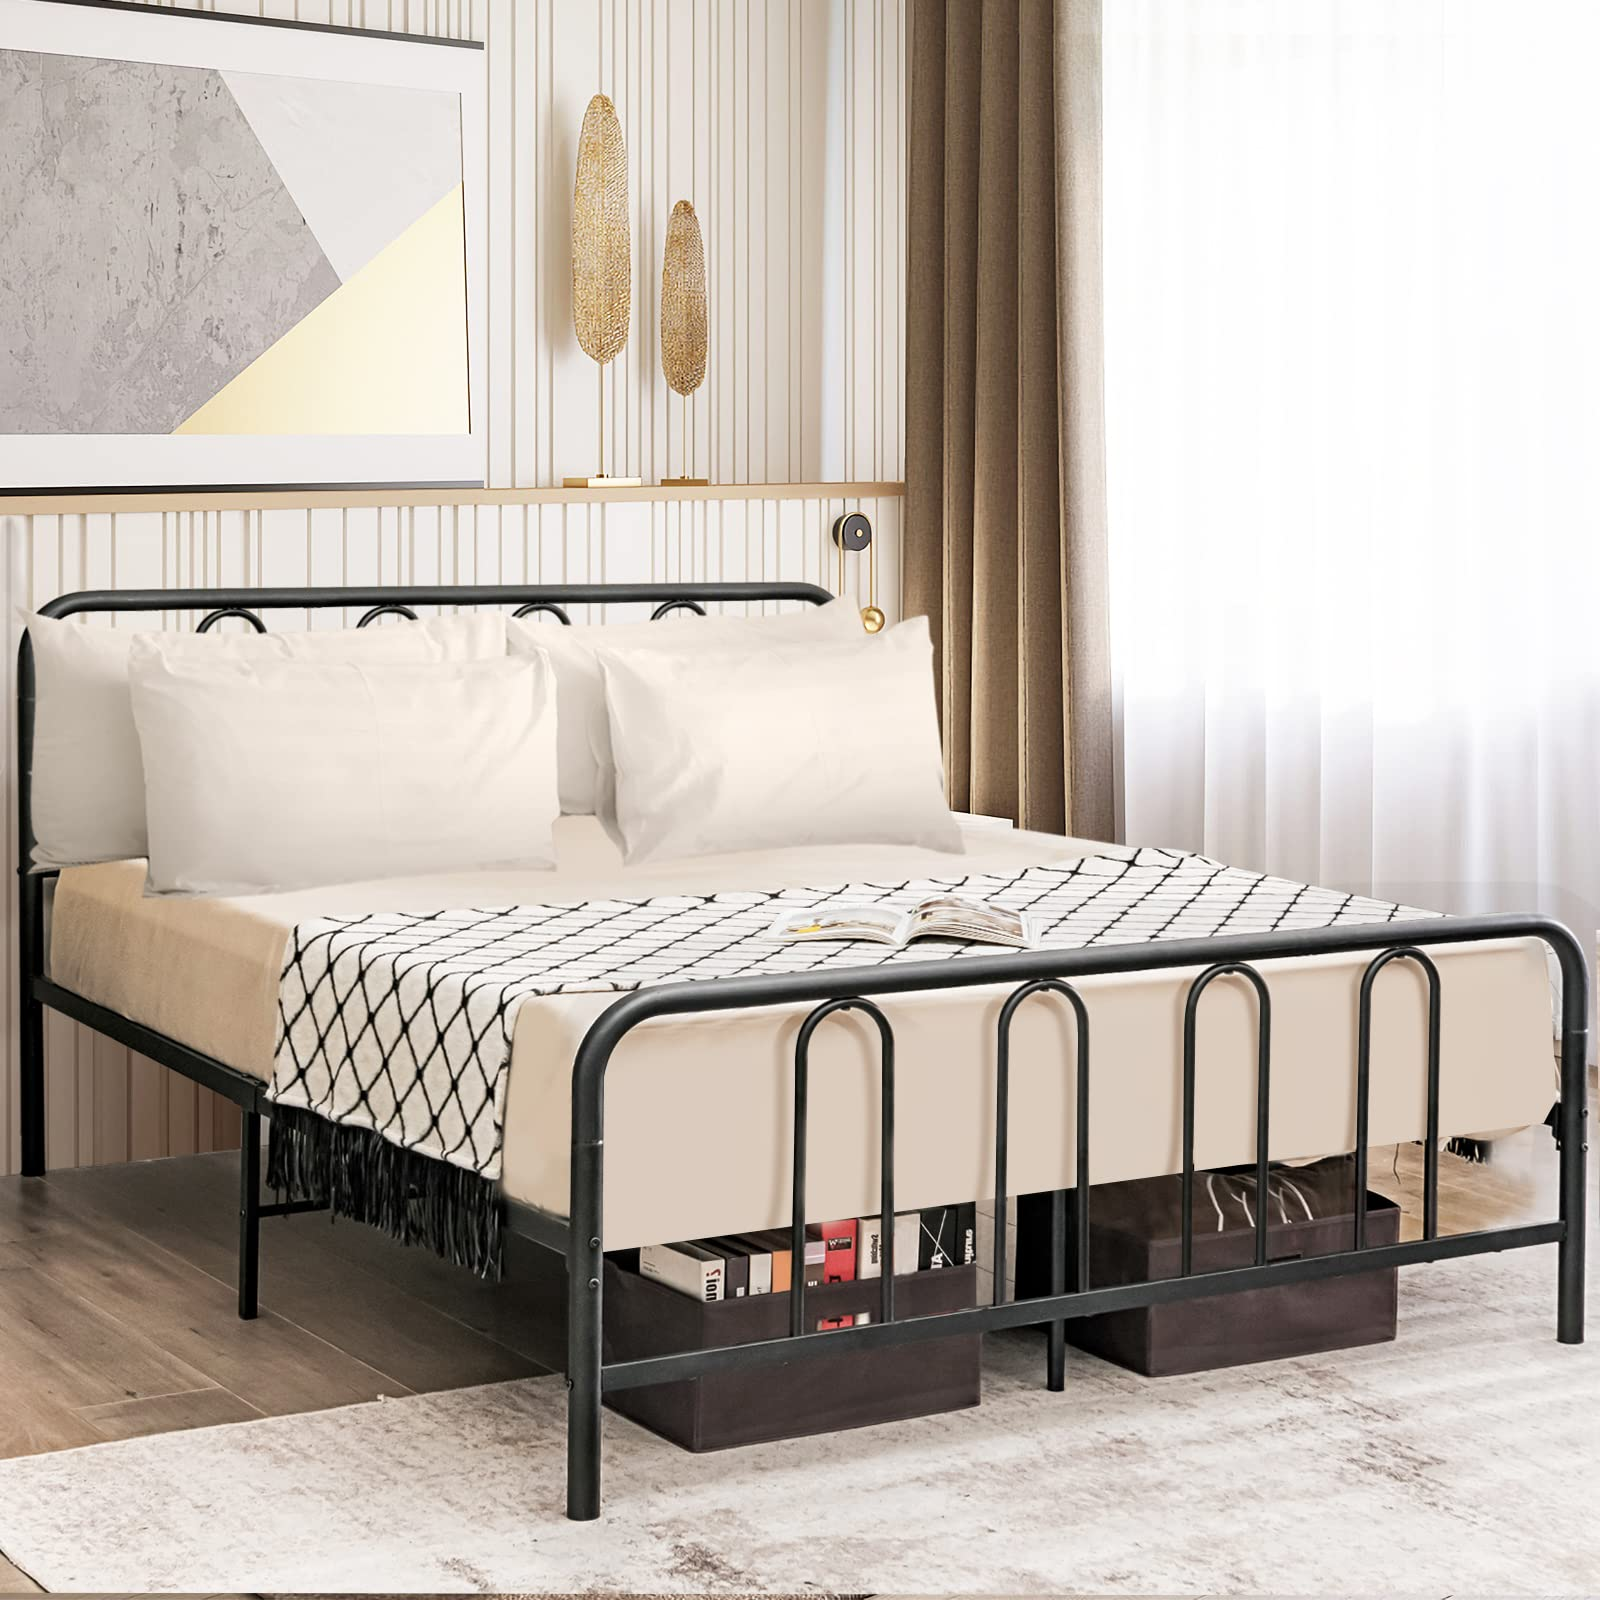 Giantex Full Size Metal Bed Frame, Modern Bed Frame